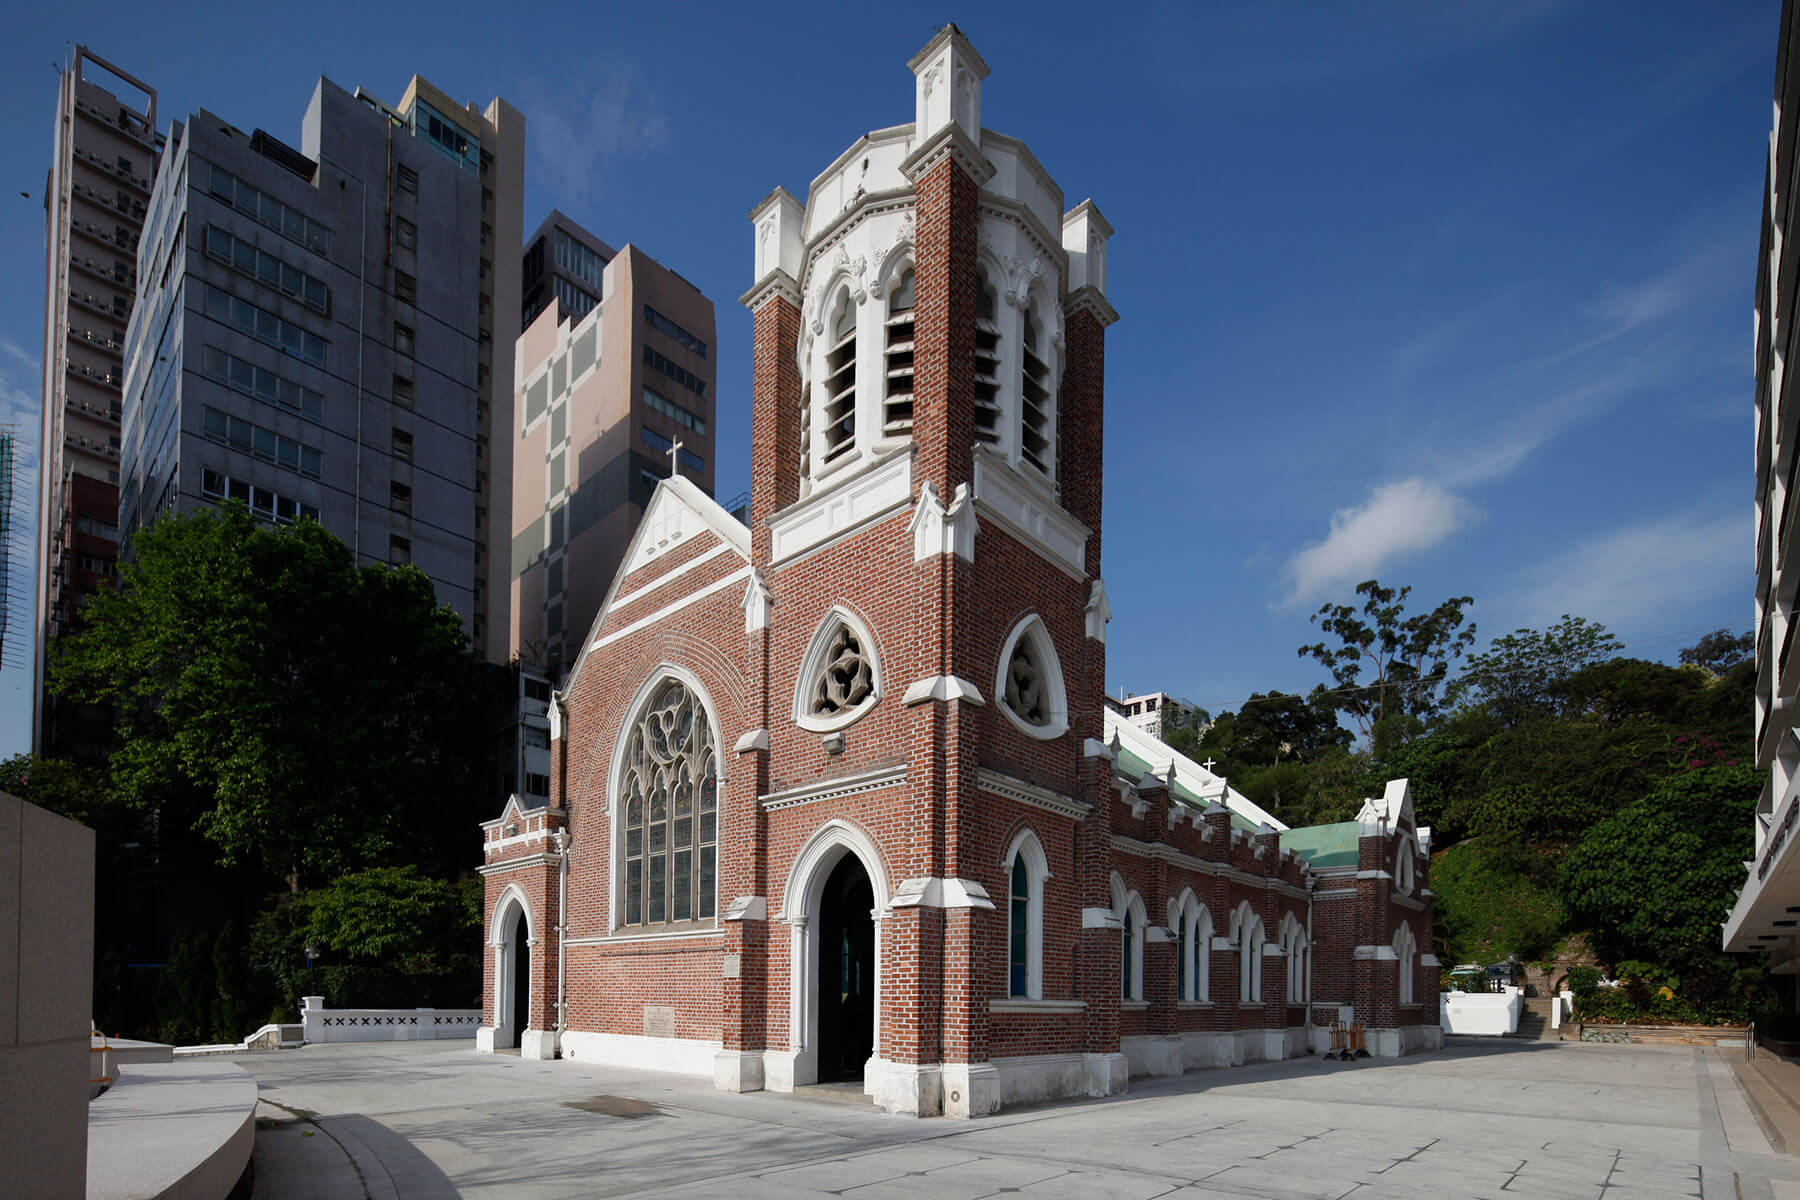 St. Andrew's Church Hong Kong